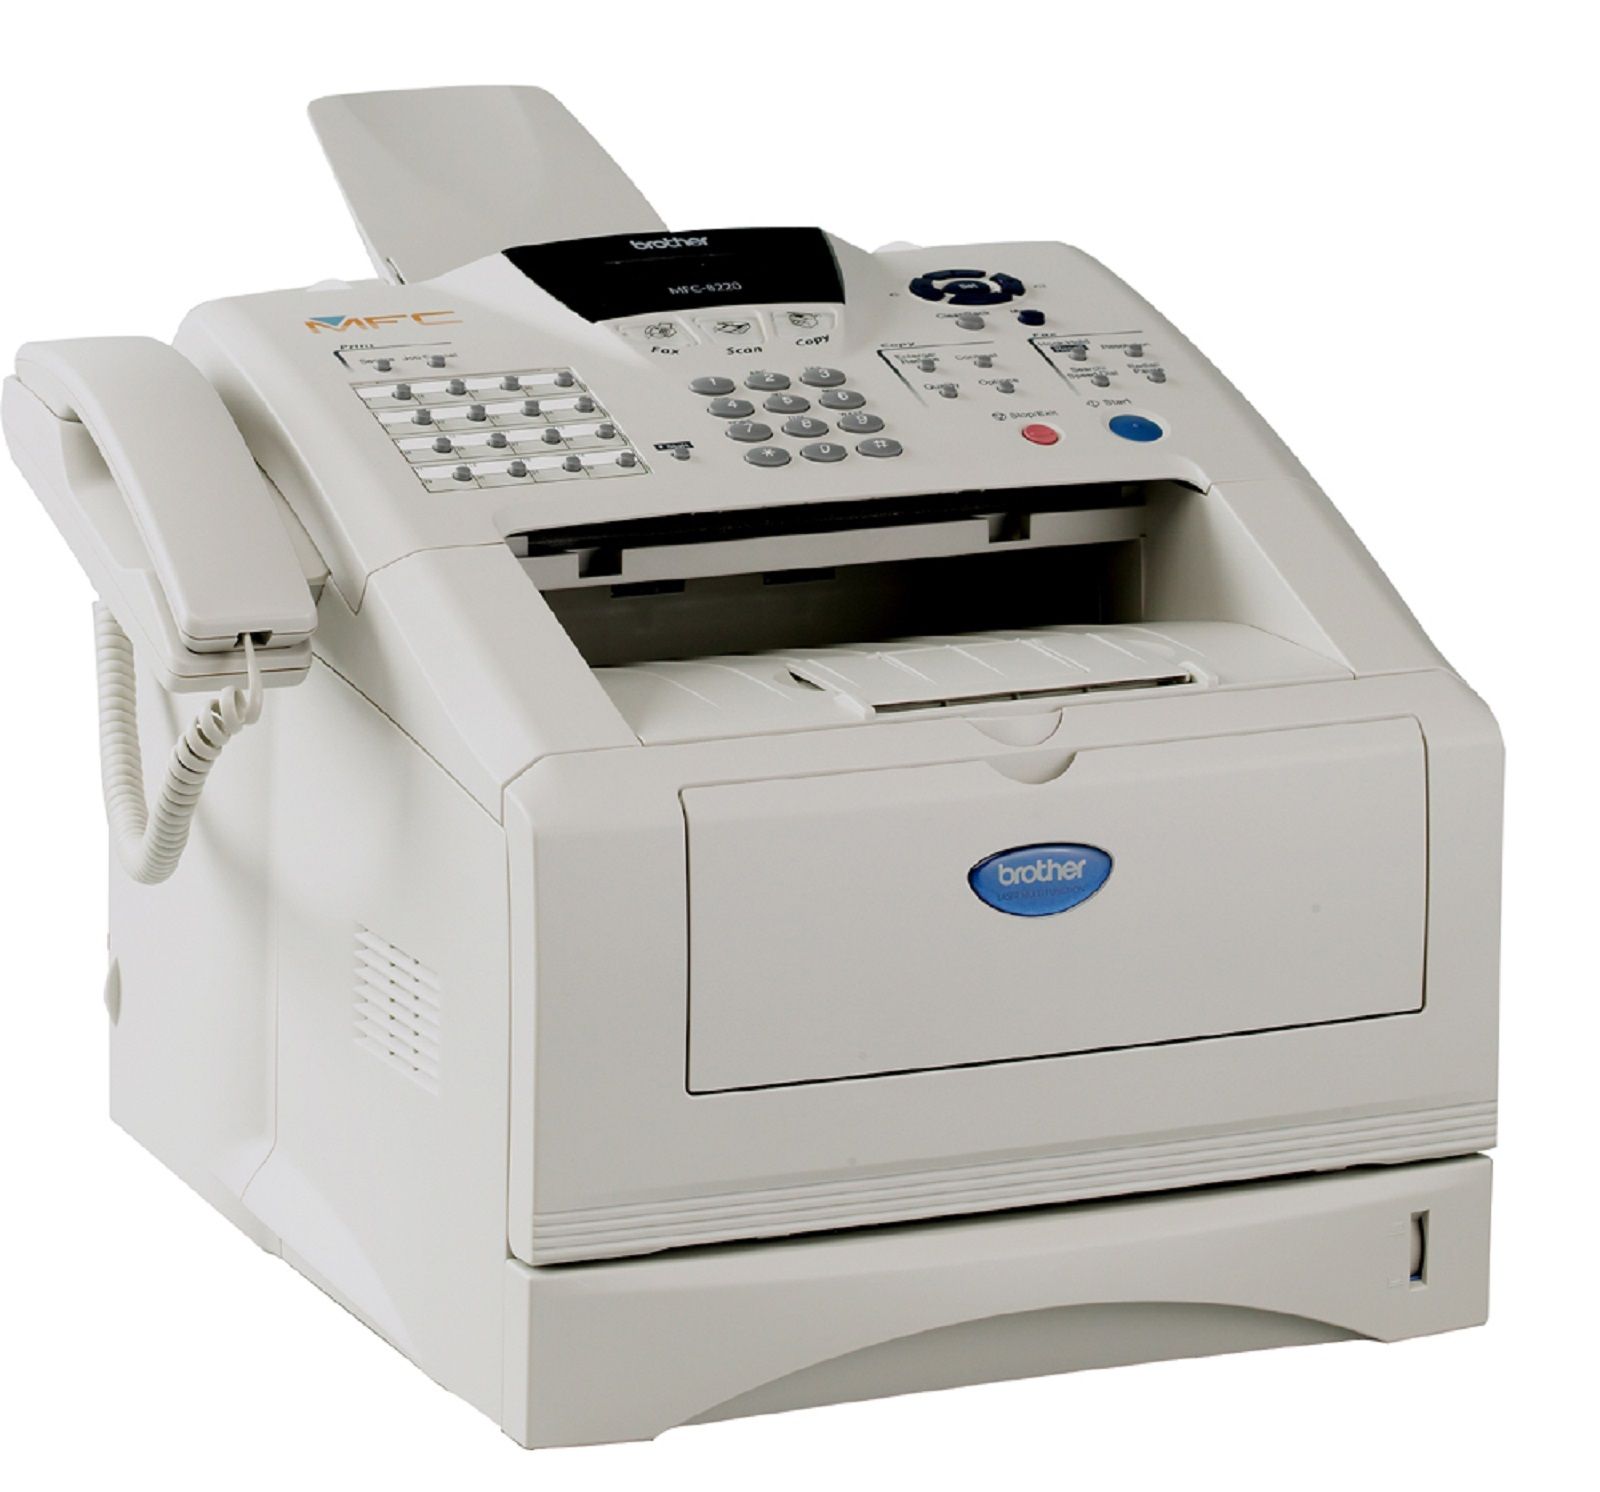 Fax machines